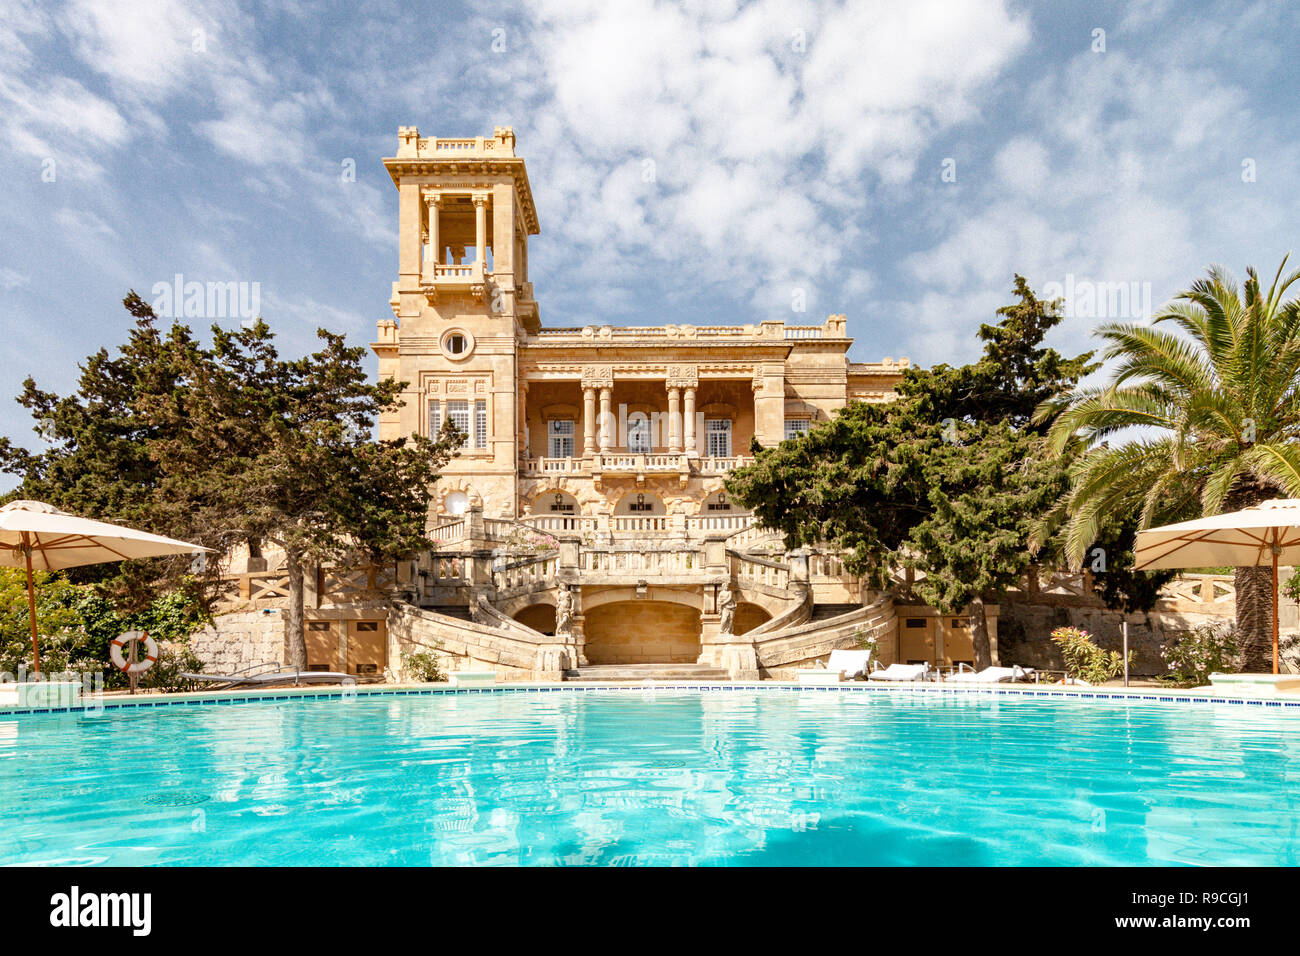 St. Julian's, Malta. 1920 Jugendstilvilla Villa Rosa im ​Park in St. Julian's Stadt erbaut vom Architekten Andrea Vassallo, Malta, reflektiert in einem azurblauen Pool. Stockfoto